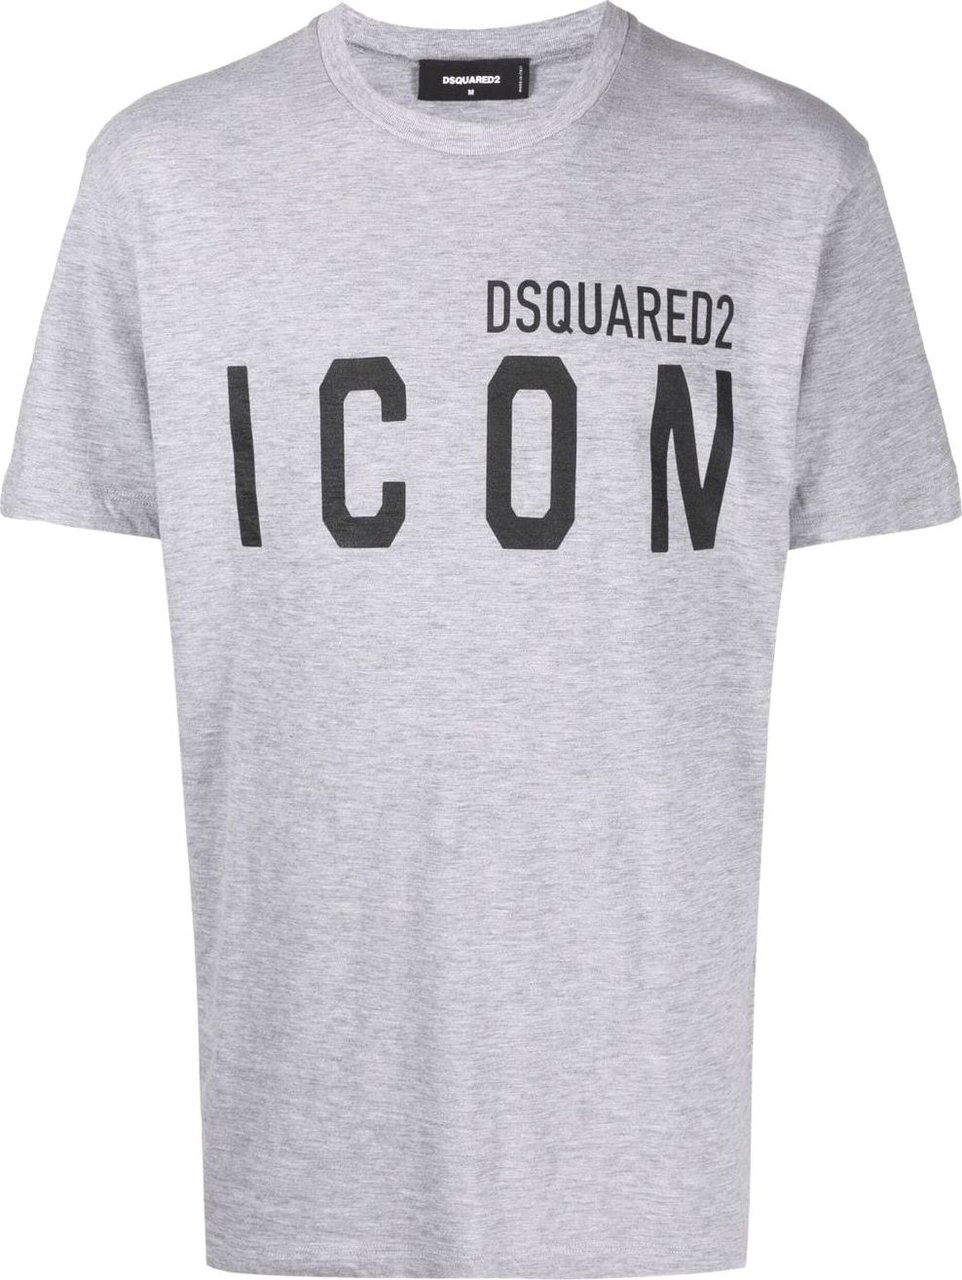 Dsquared2 DSQUARED2 T-Shirt Clothing 857m XL 22FW Grijs